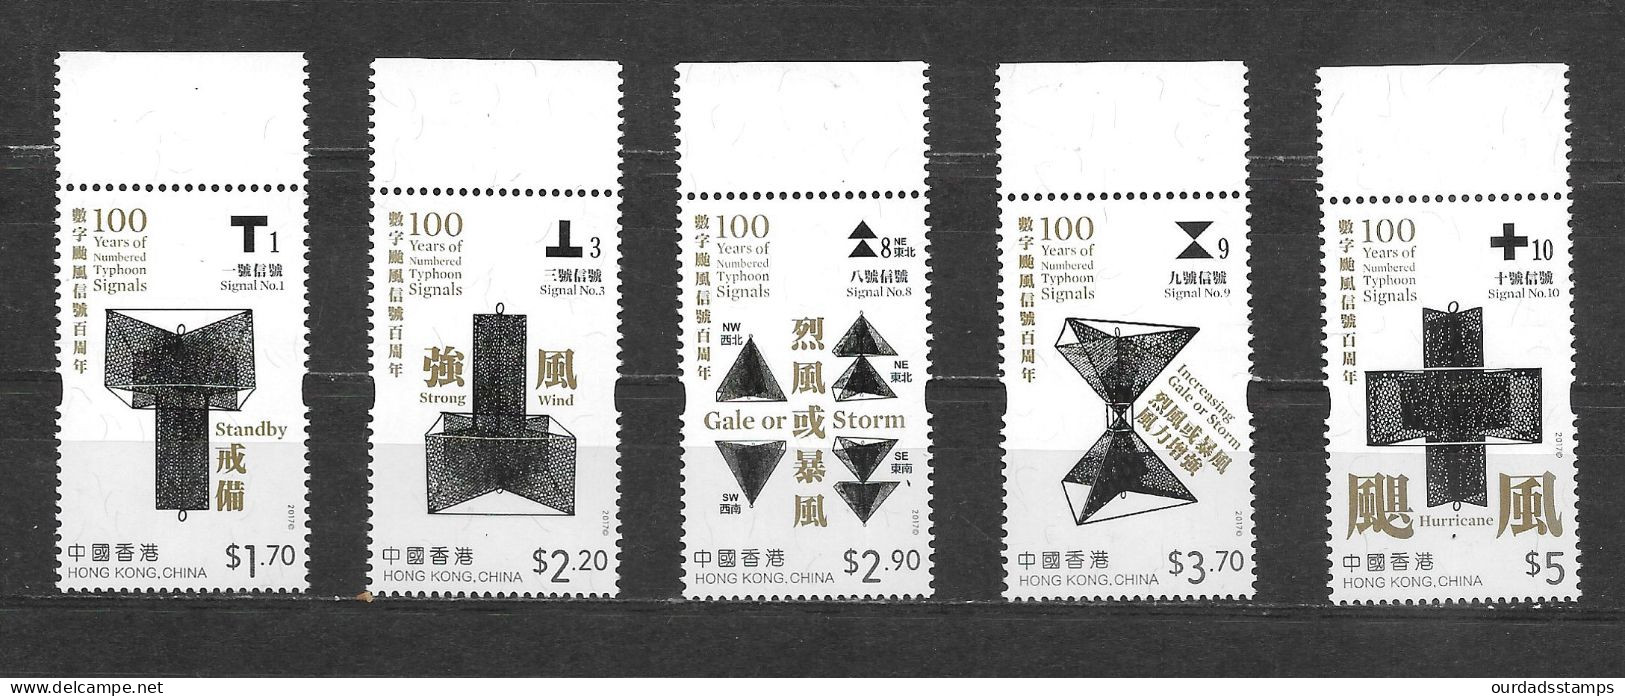 Hong Kong, 2017 Typhoon Signals, Complete Set Marginals MNH (H550) - Unused Stamps